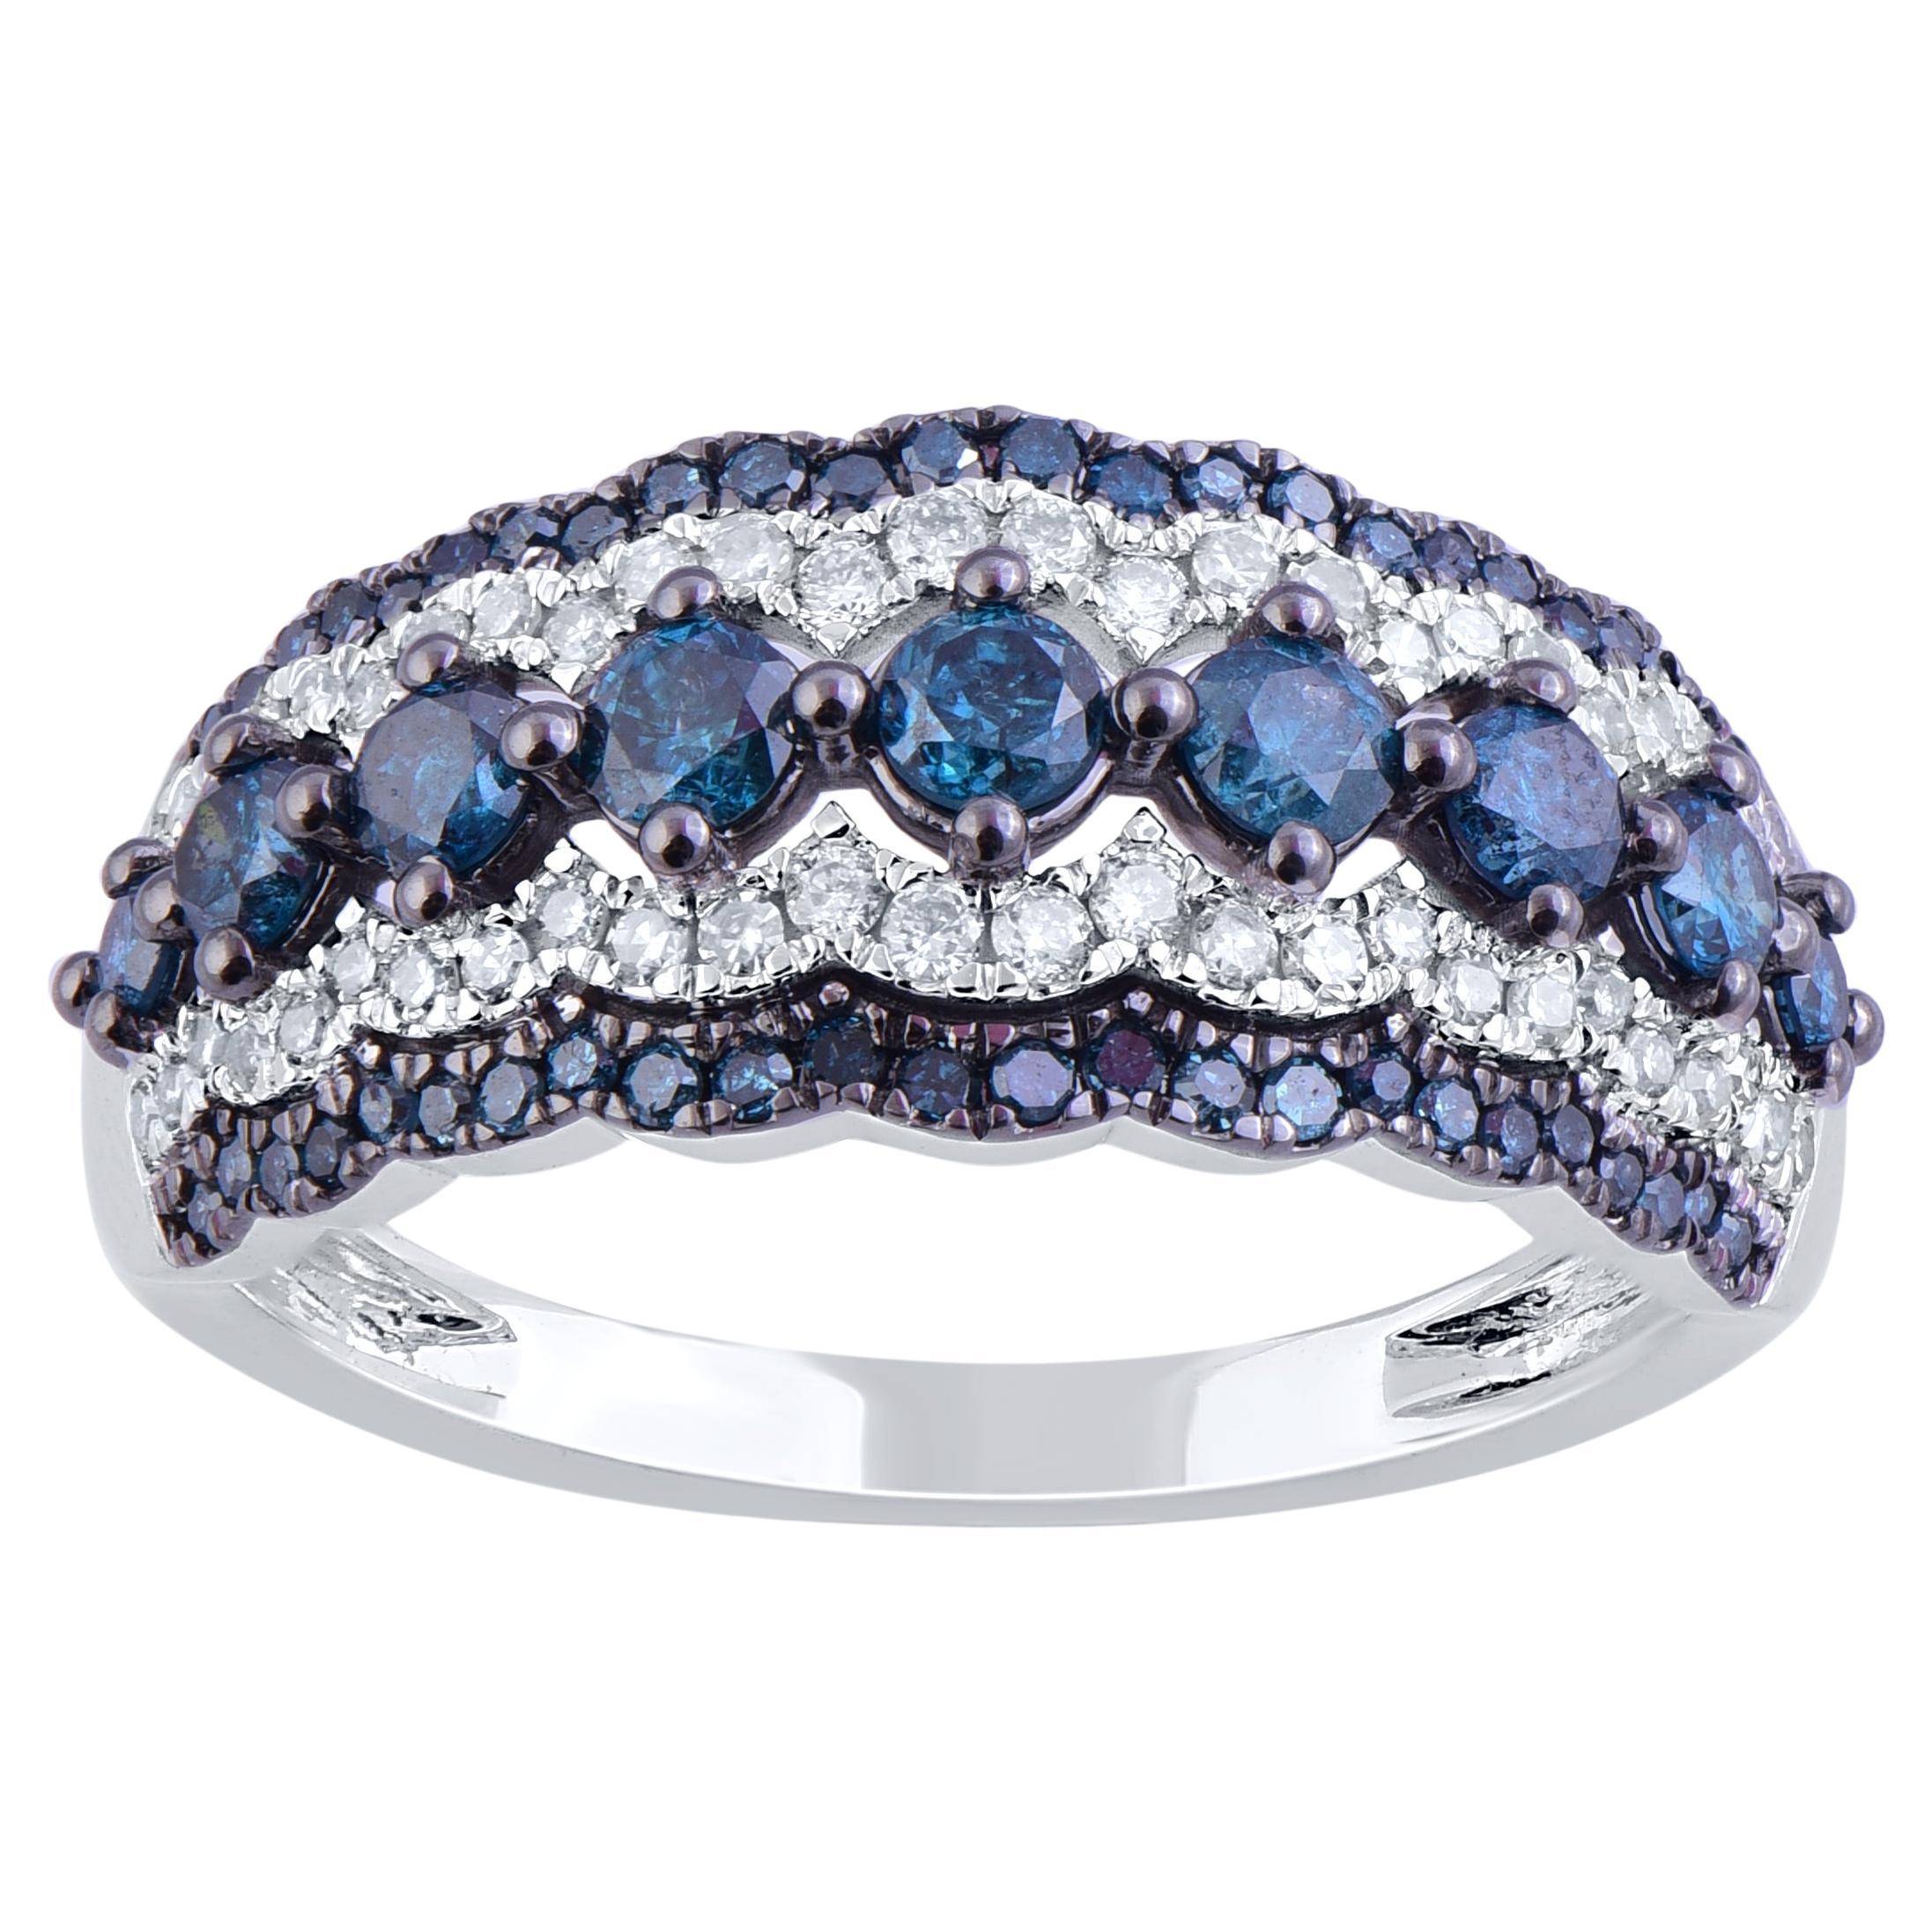 TJD 1.0 Carat White & Blue Treated Diamond 14 Karat White Gold Wedding Band Ring For Sale